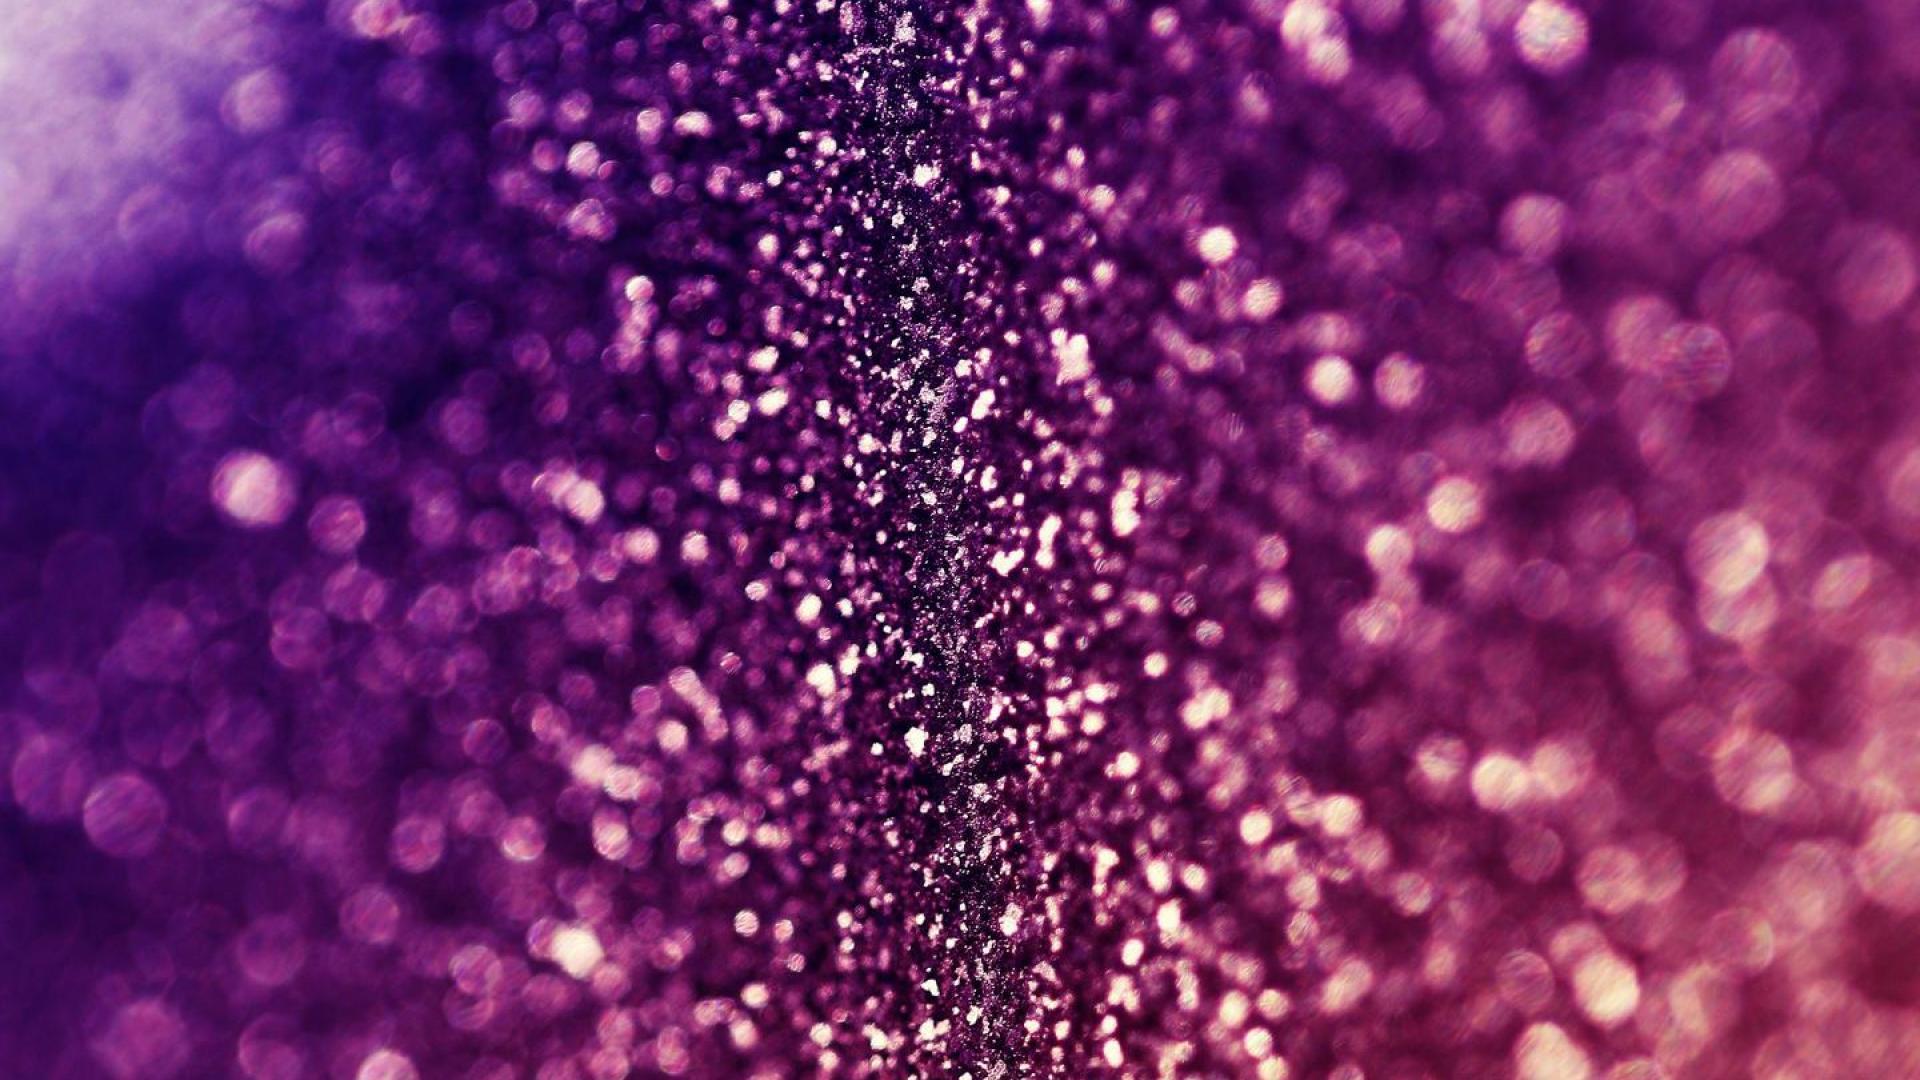 Glitter Wallpaper HD